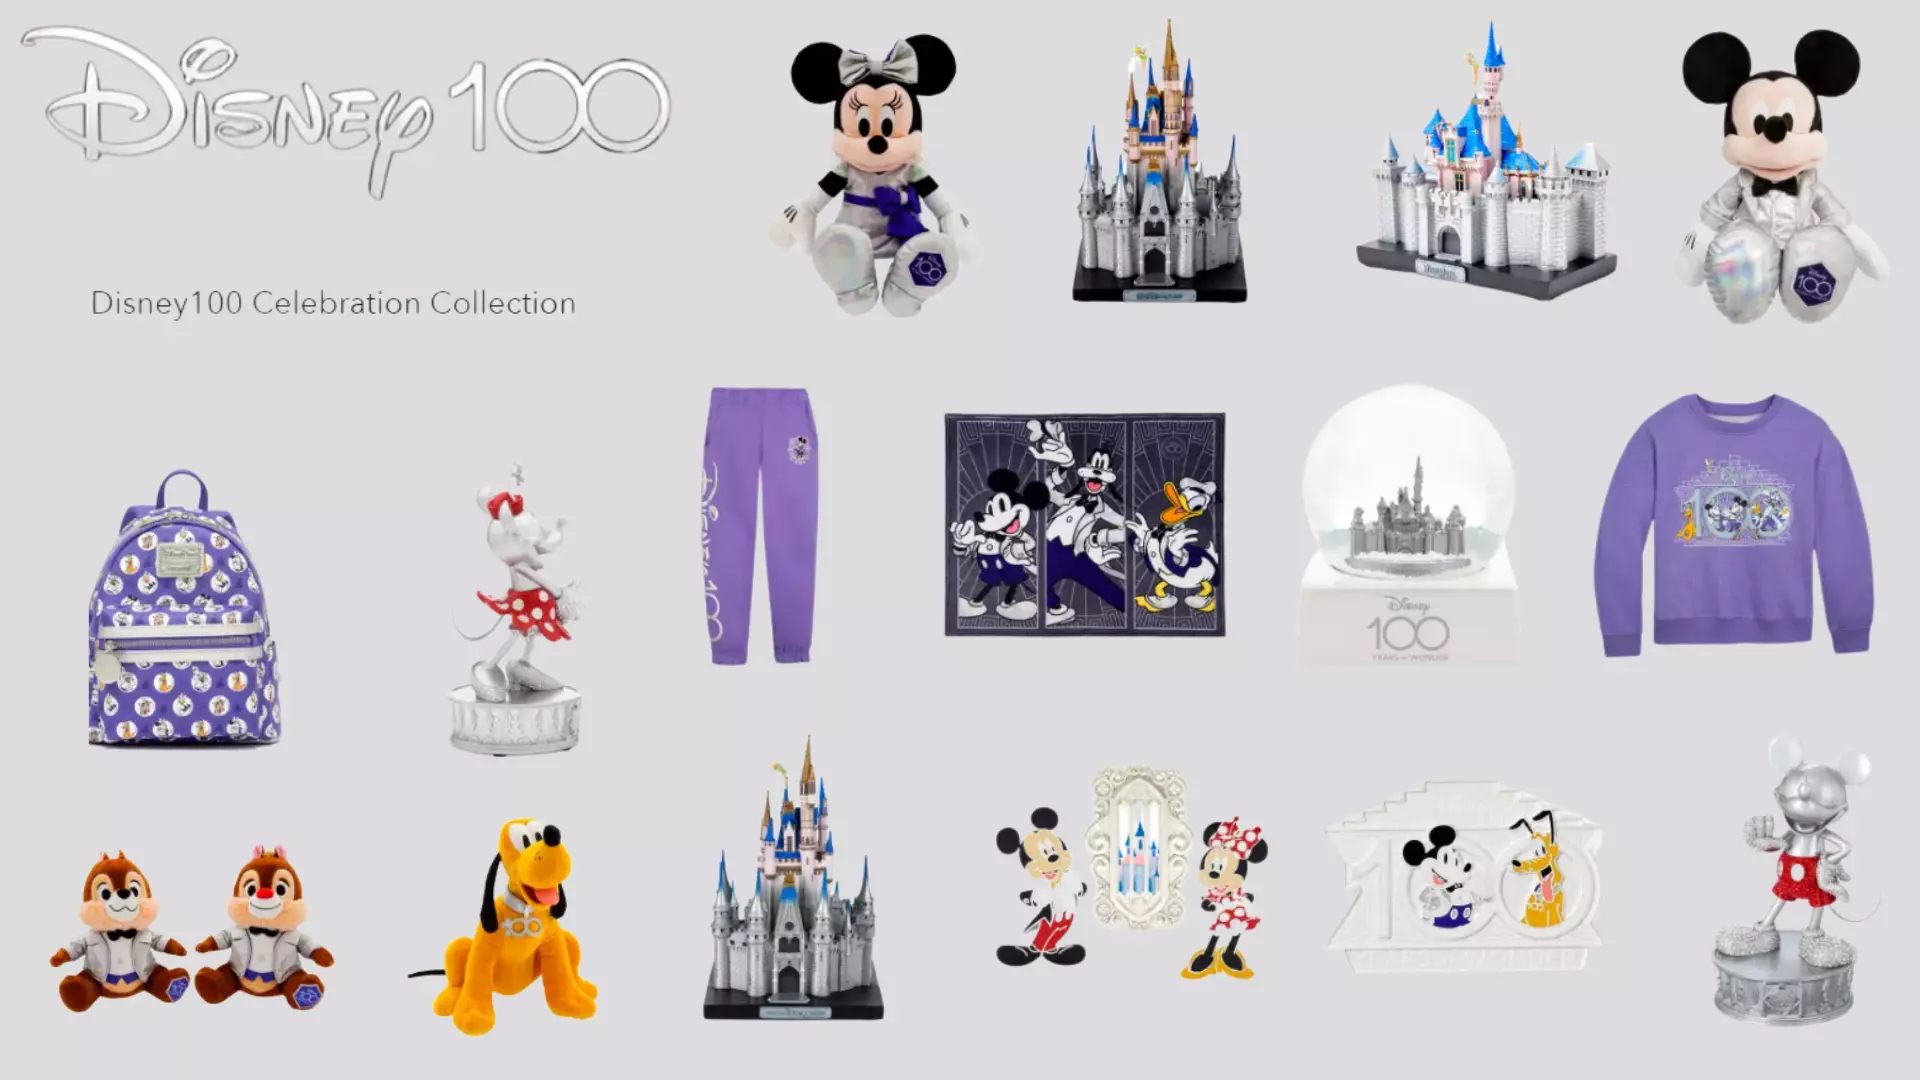 Disney 100 Celebration Collection - Disneyland Paris